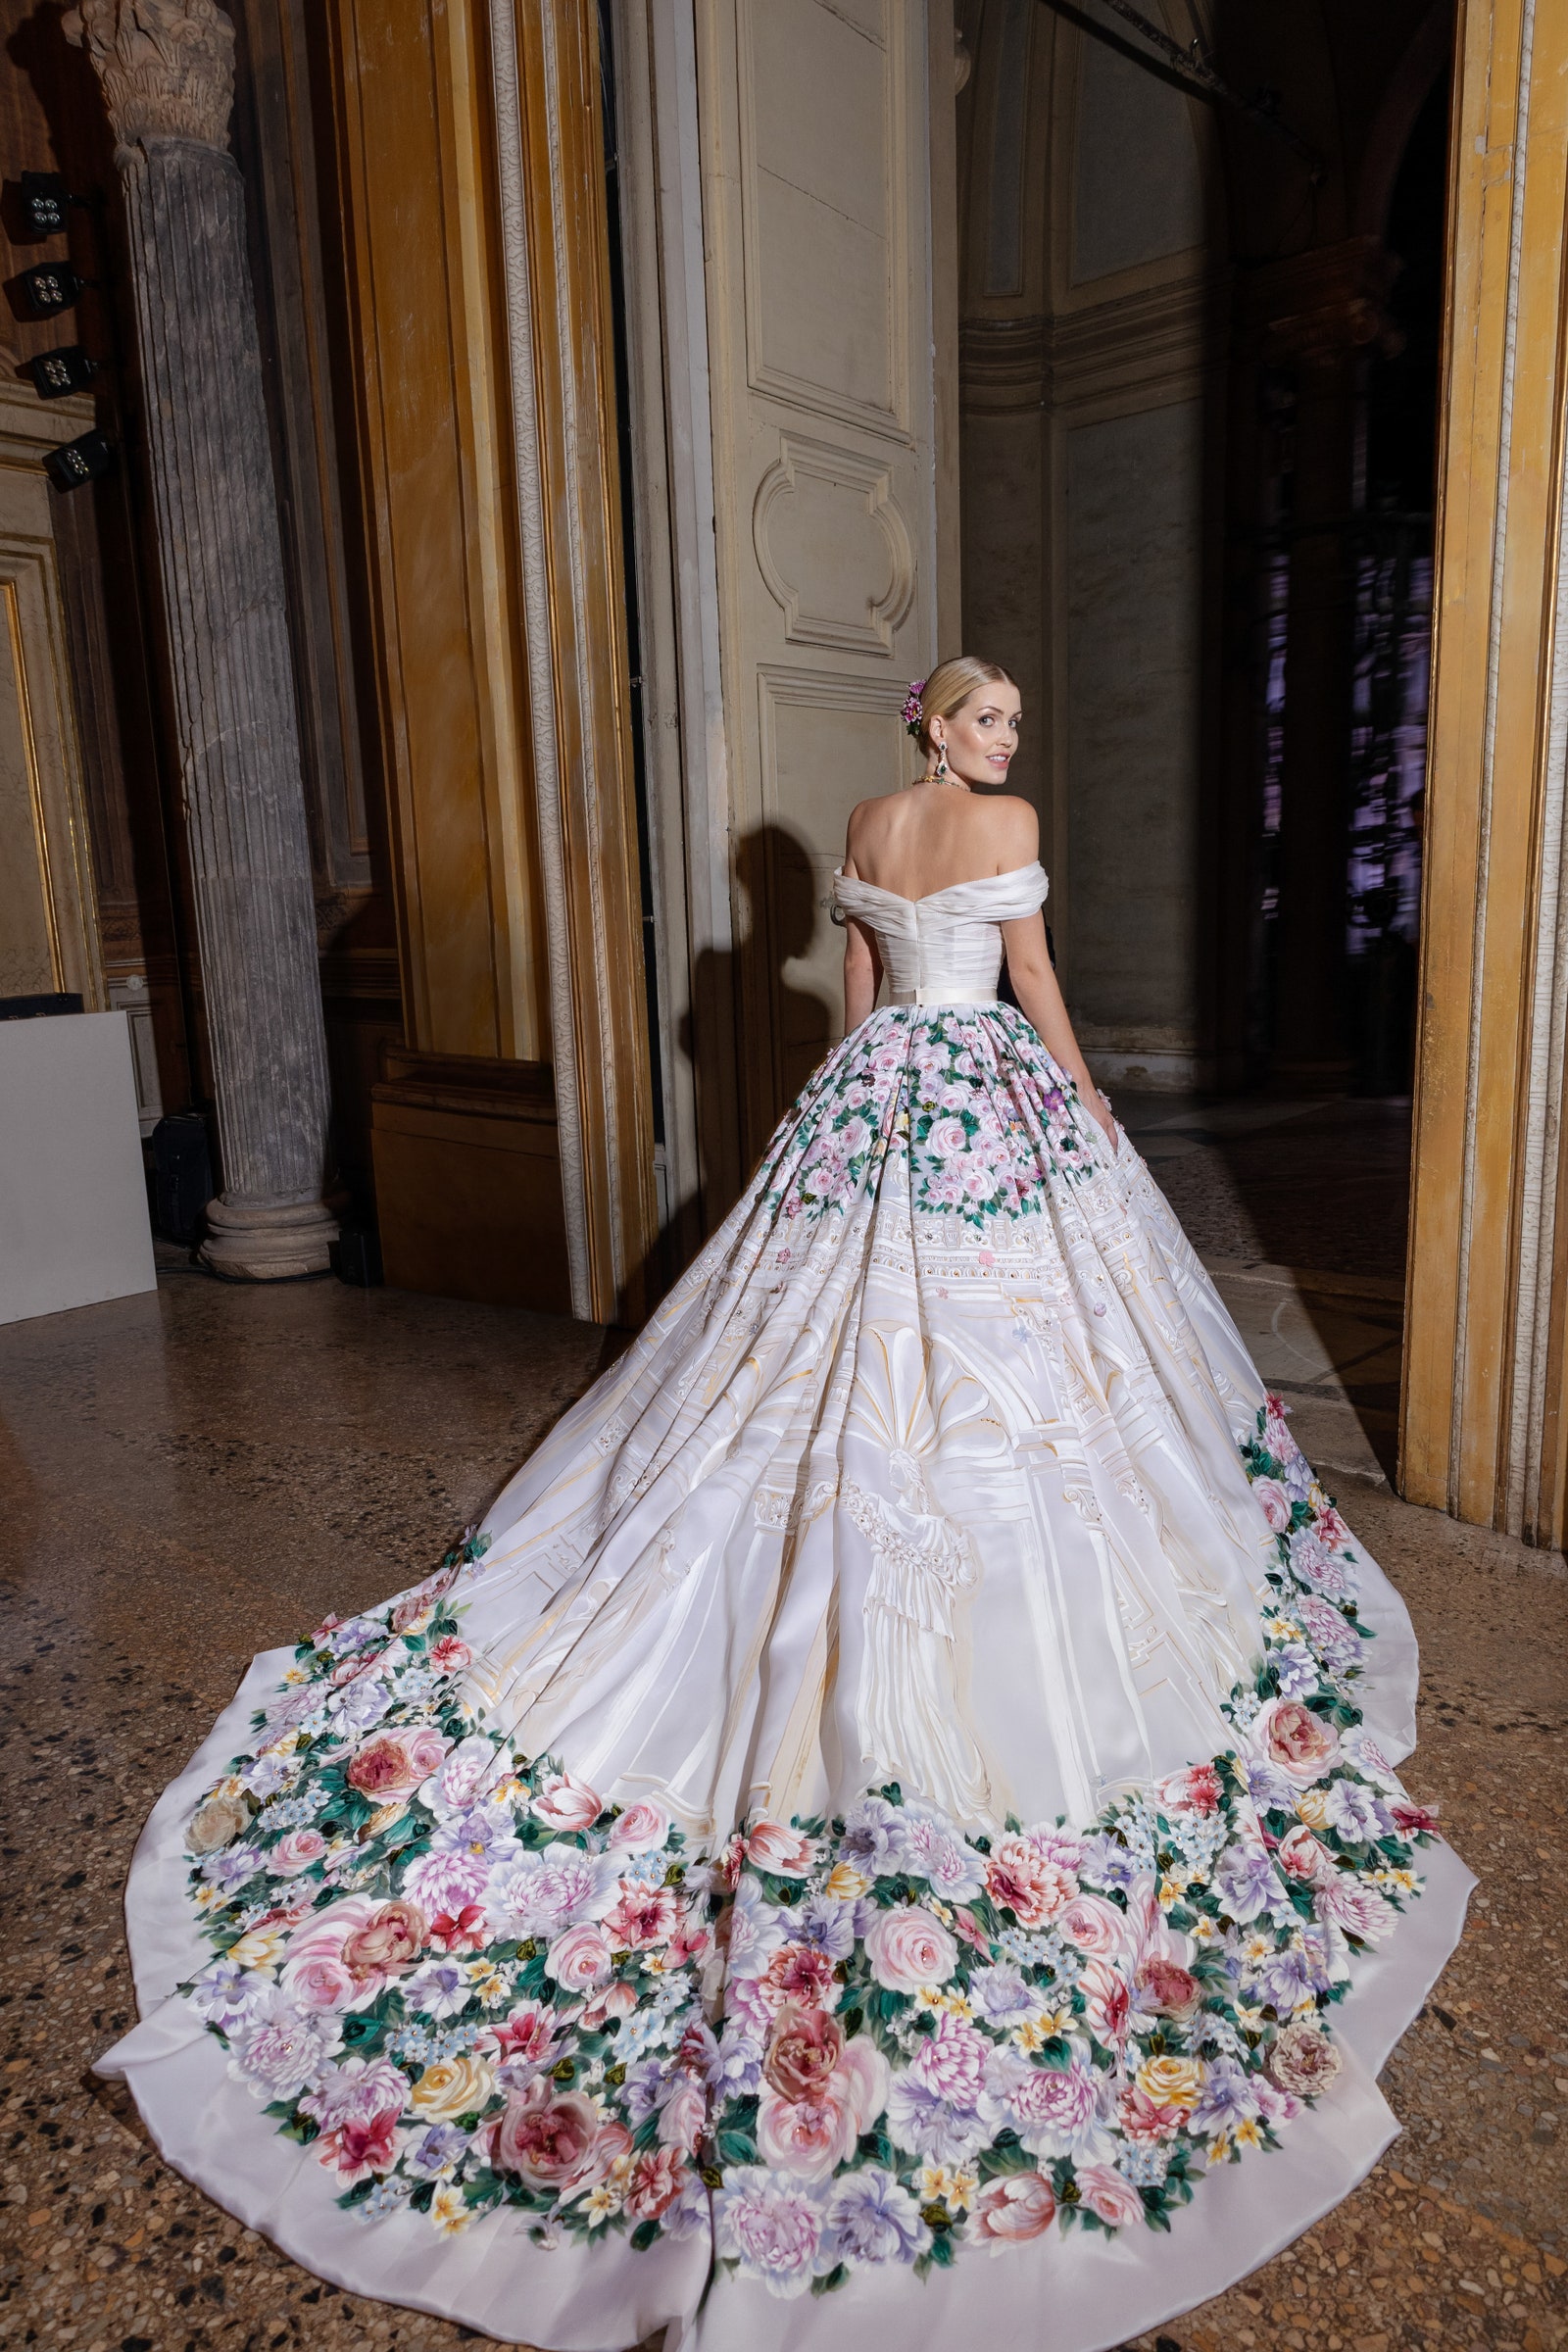 Dolce ☀ Gabbana wedding dress | Hello.